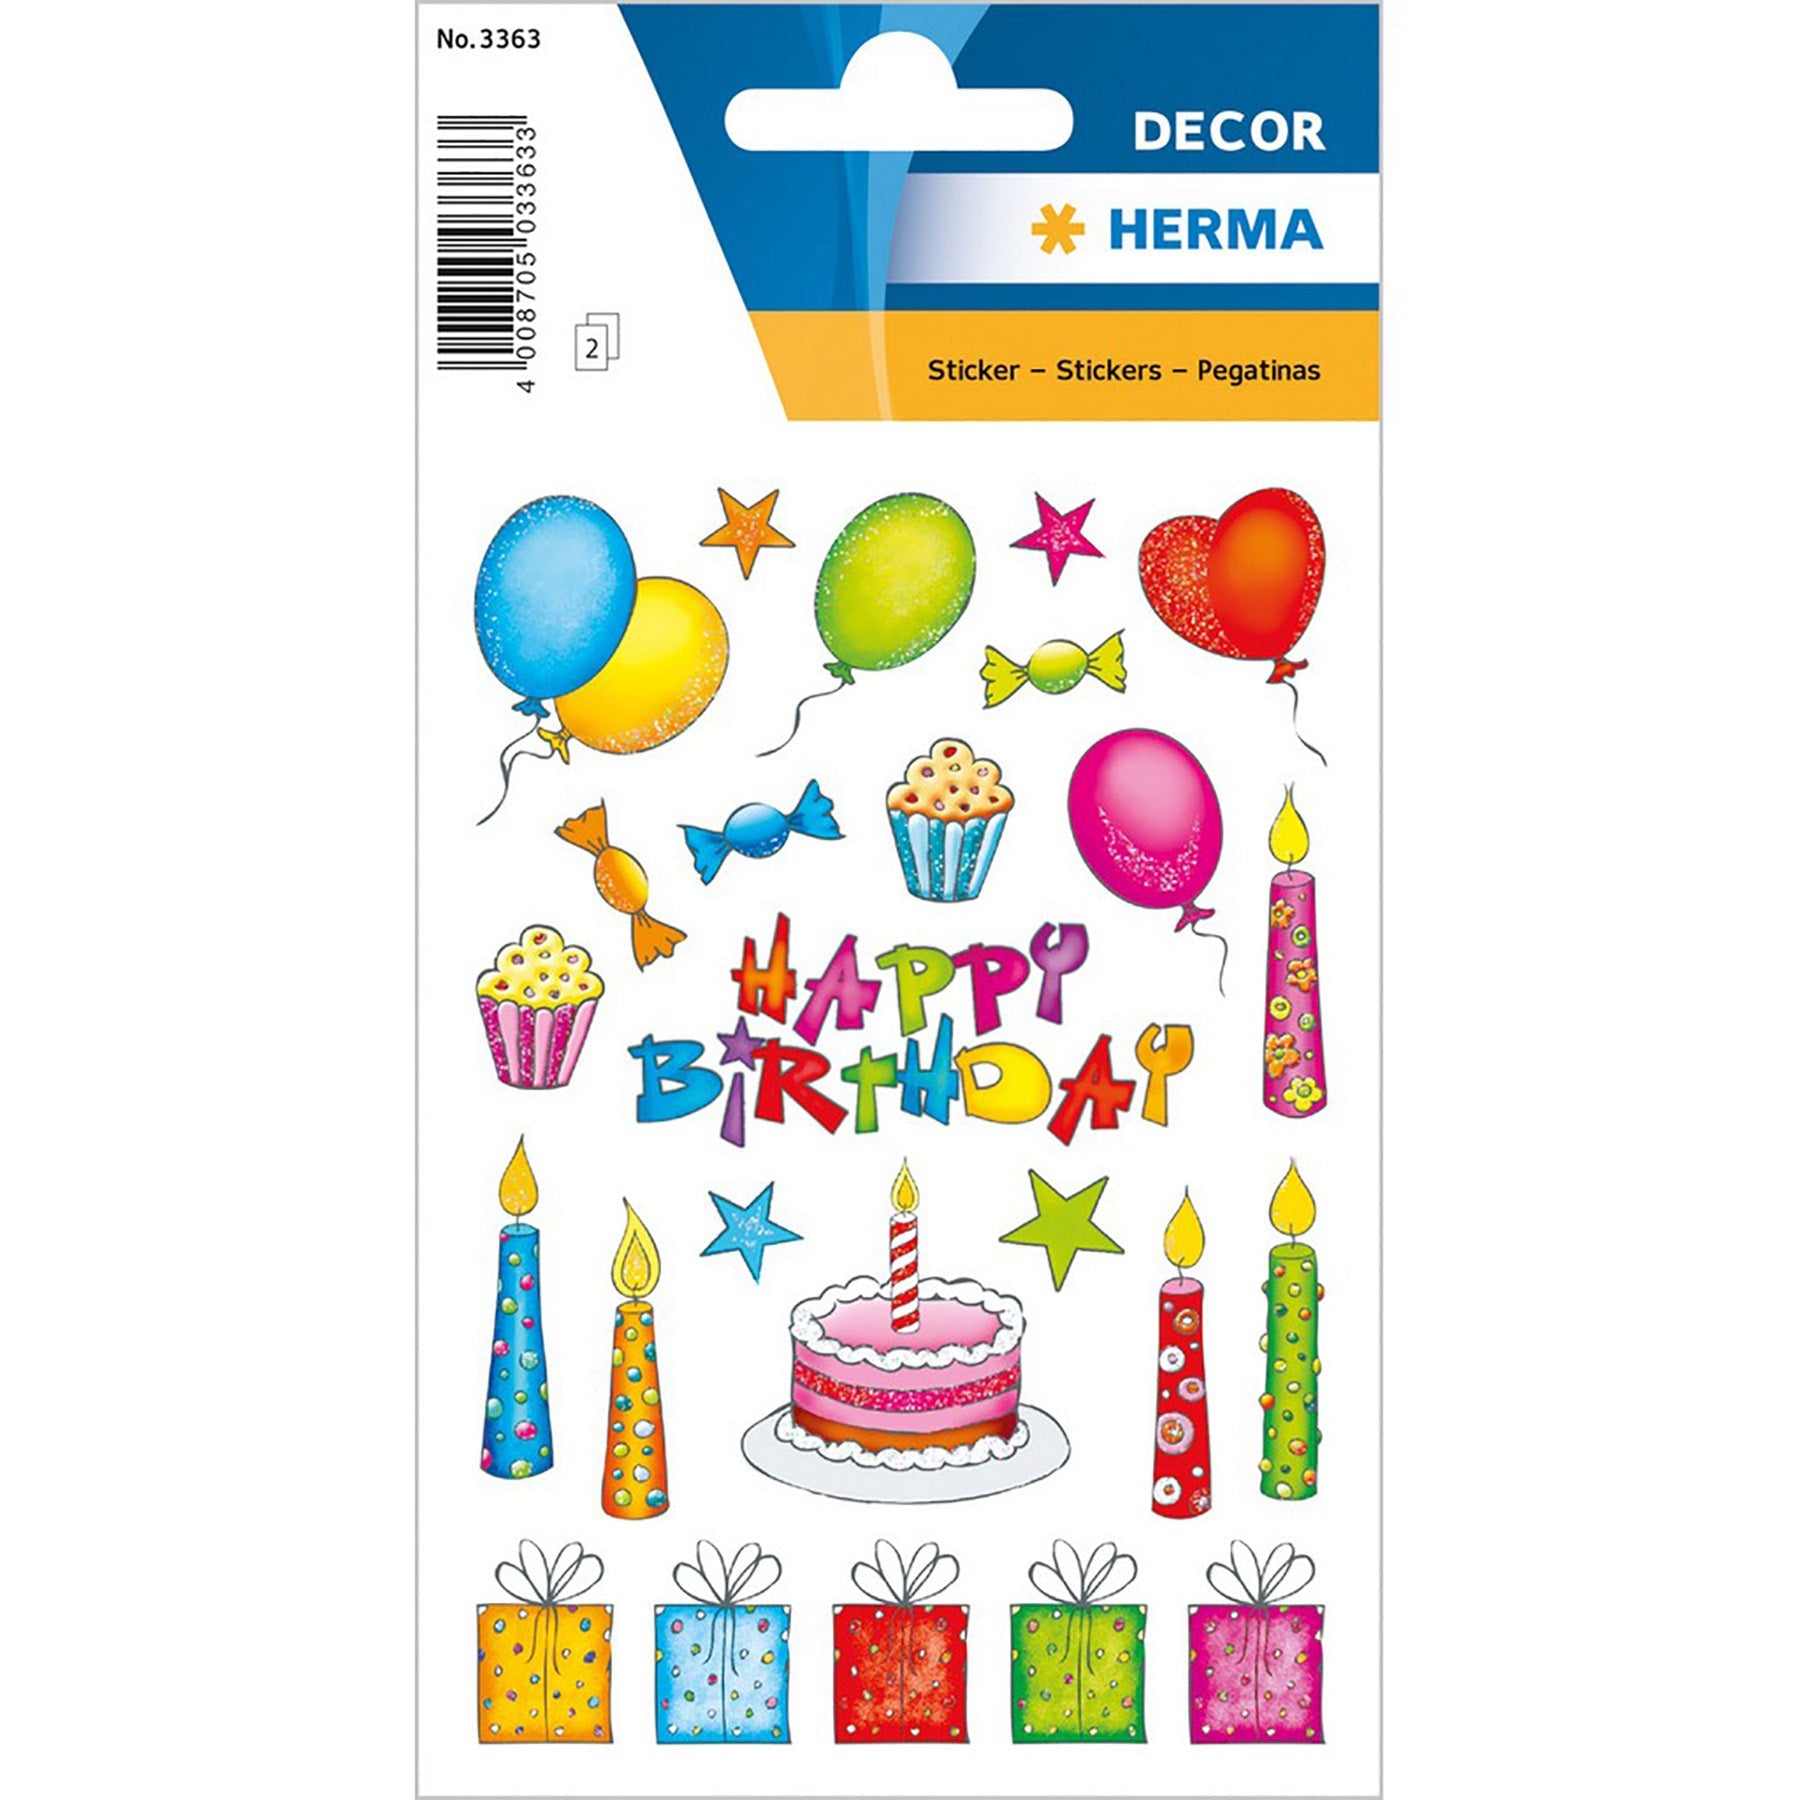 Herma Decor 2 Sheets Stickers Birthday Glittery 4.75x3.1in Sheet